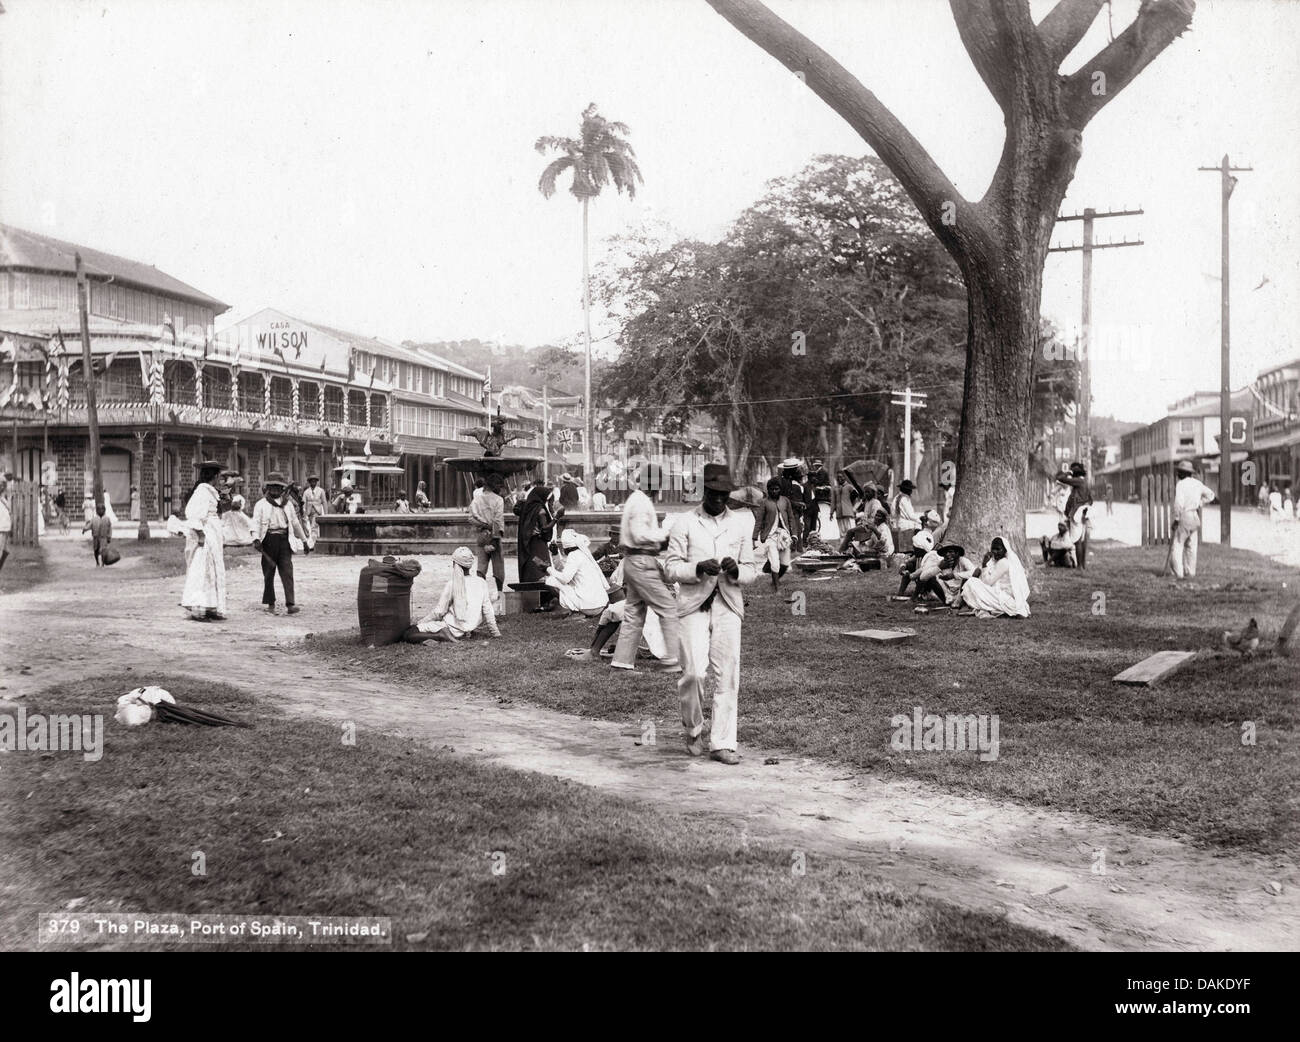 The Plaza, Port of Spain, Trinidad, ca 1890 Stock Photo